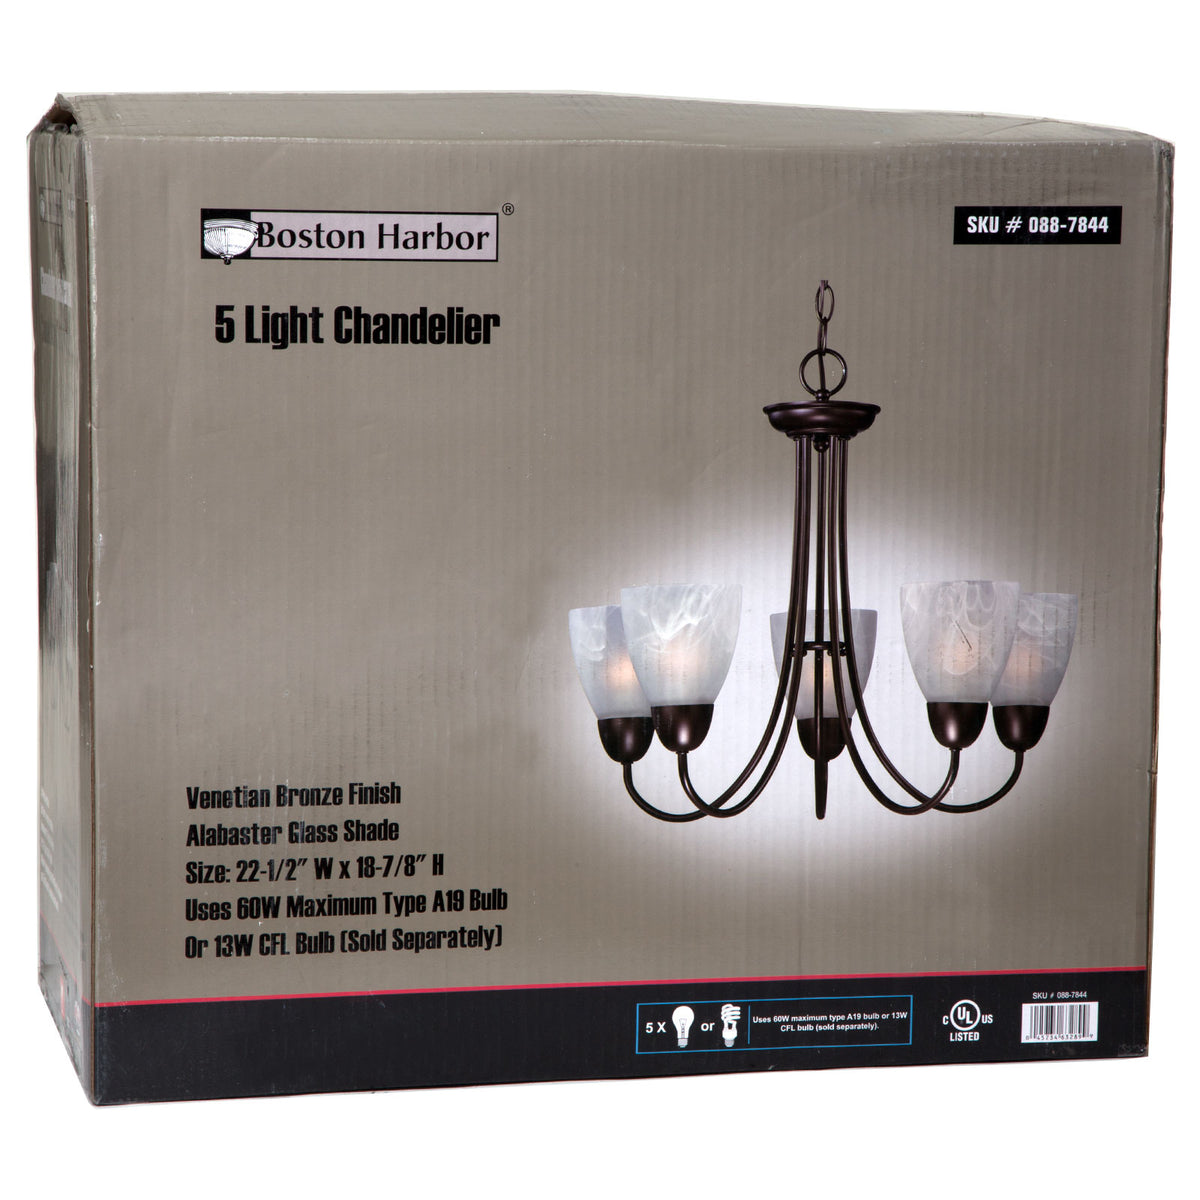 buy chandeliers light fixtures at cheap rate in bulk. wholesale & retail lamp parts & accessories store. home décor ideas, maintenance, repair replacement parts